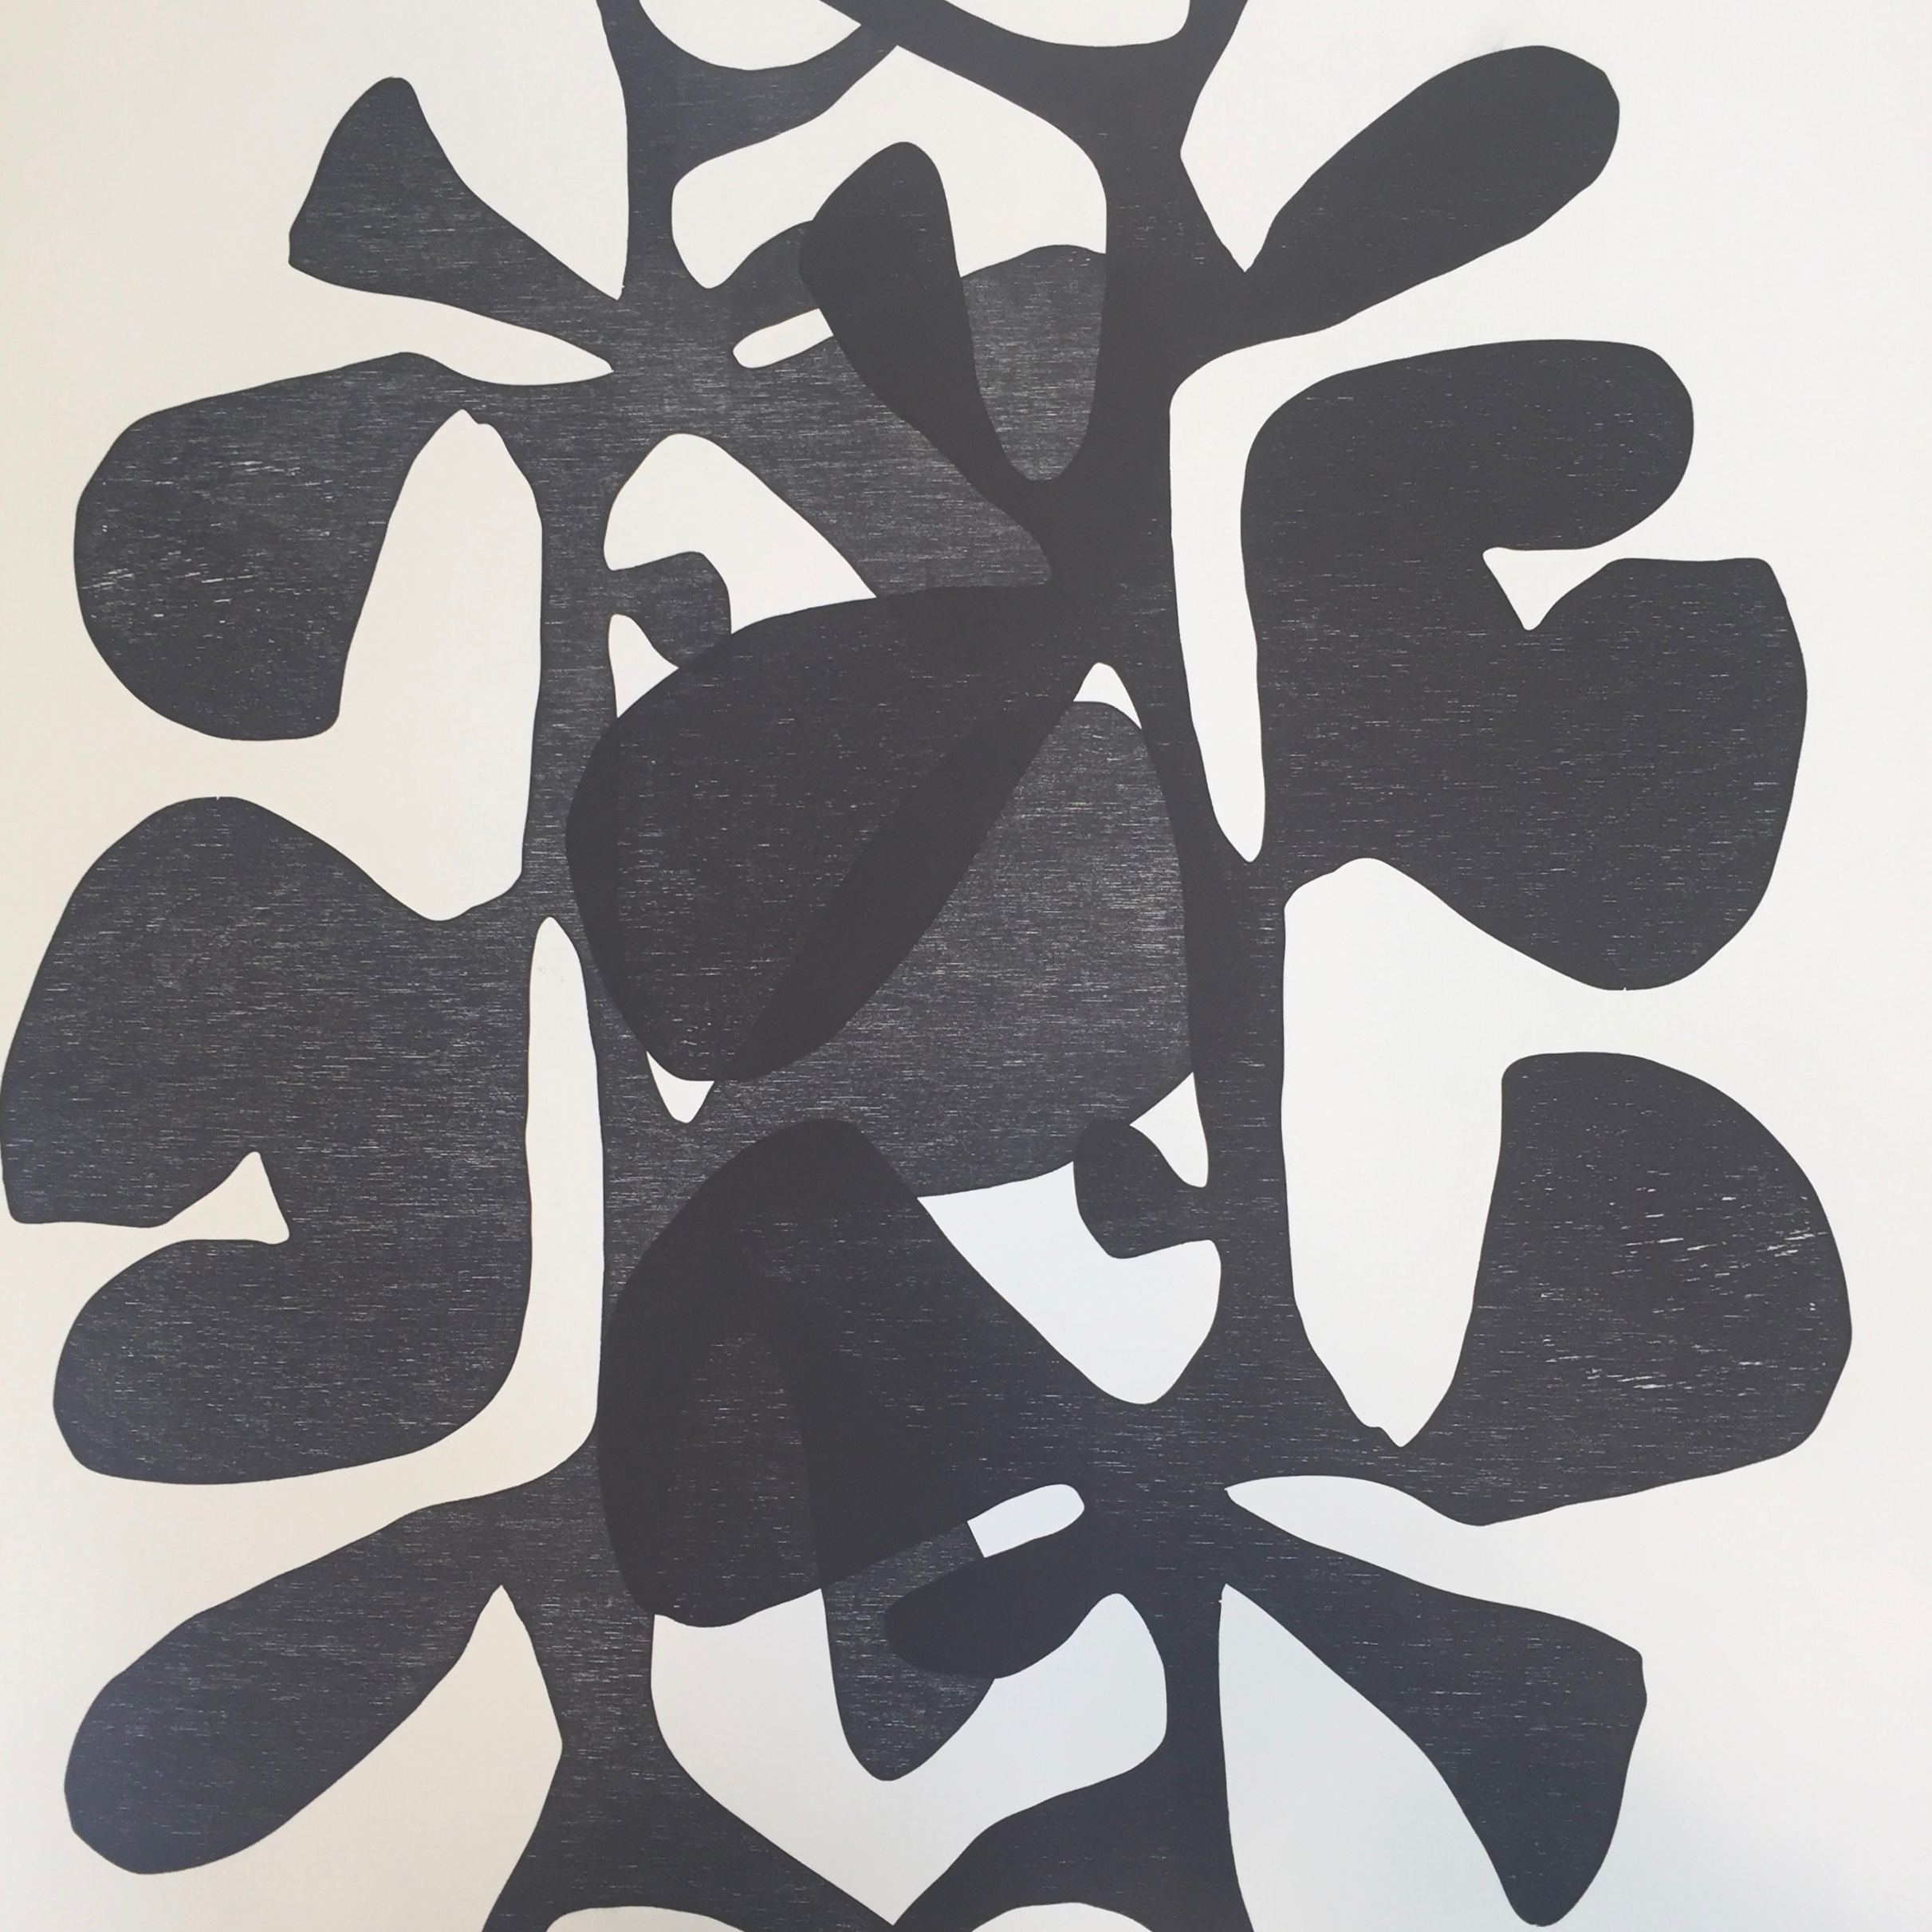 Bauhaus Botanical - Black on Black: created by Monica Monaghan-Milstein for MonicaArts Design LLC